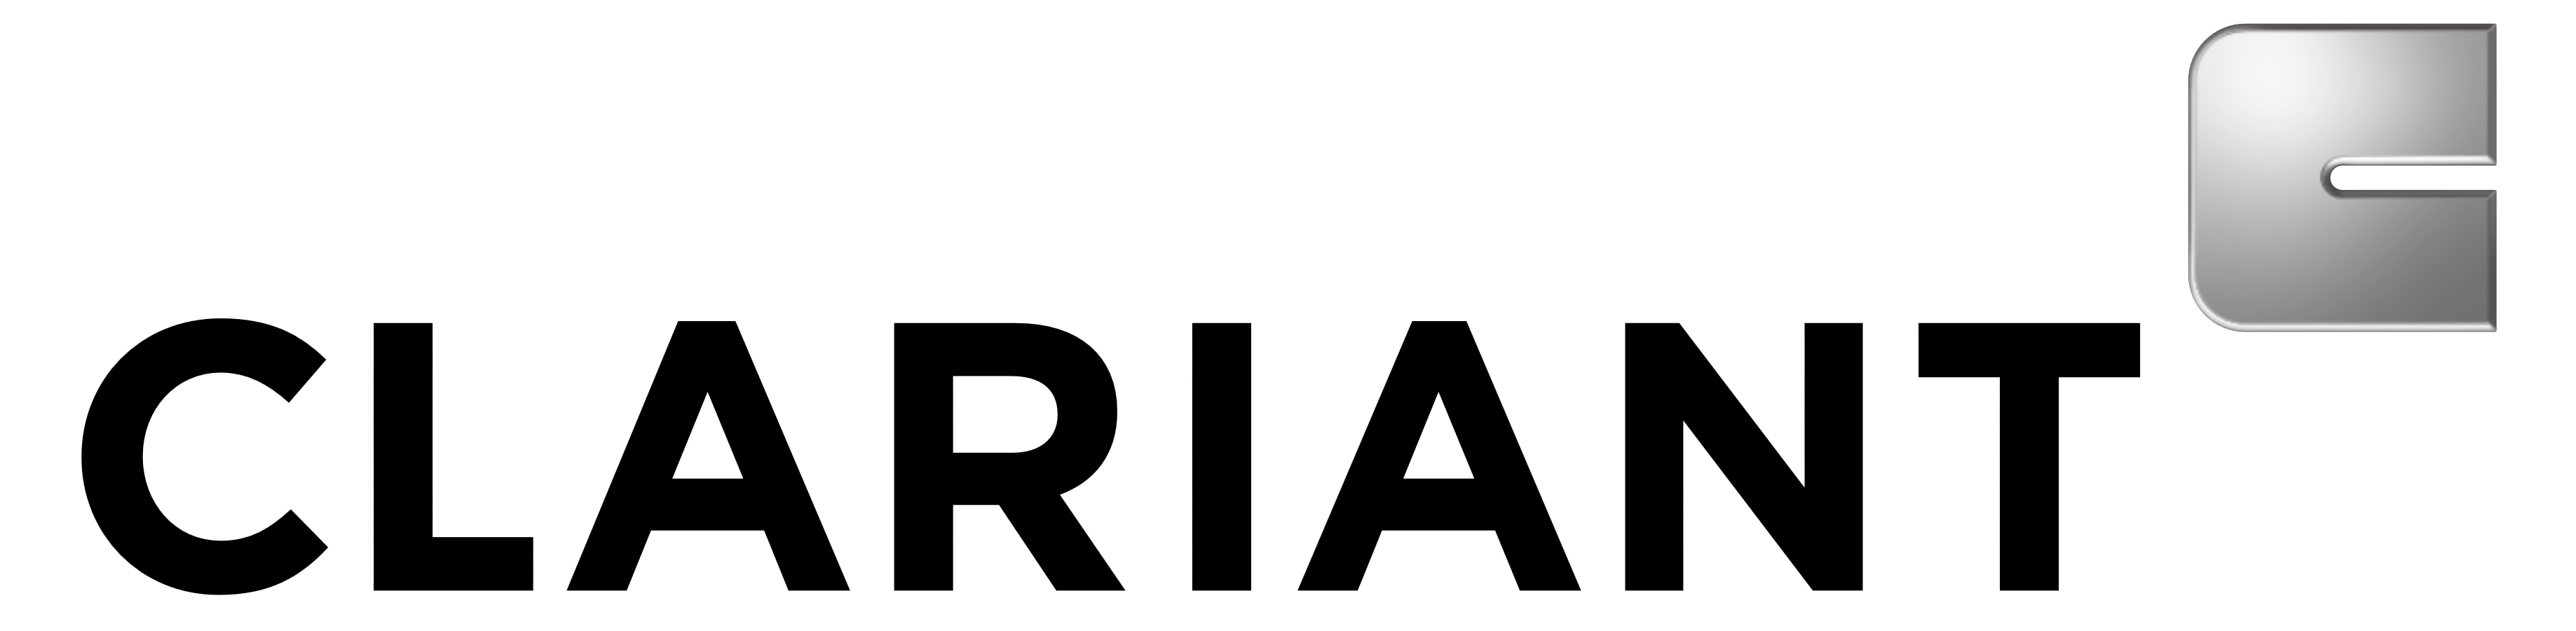 Clariant logo, logotype